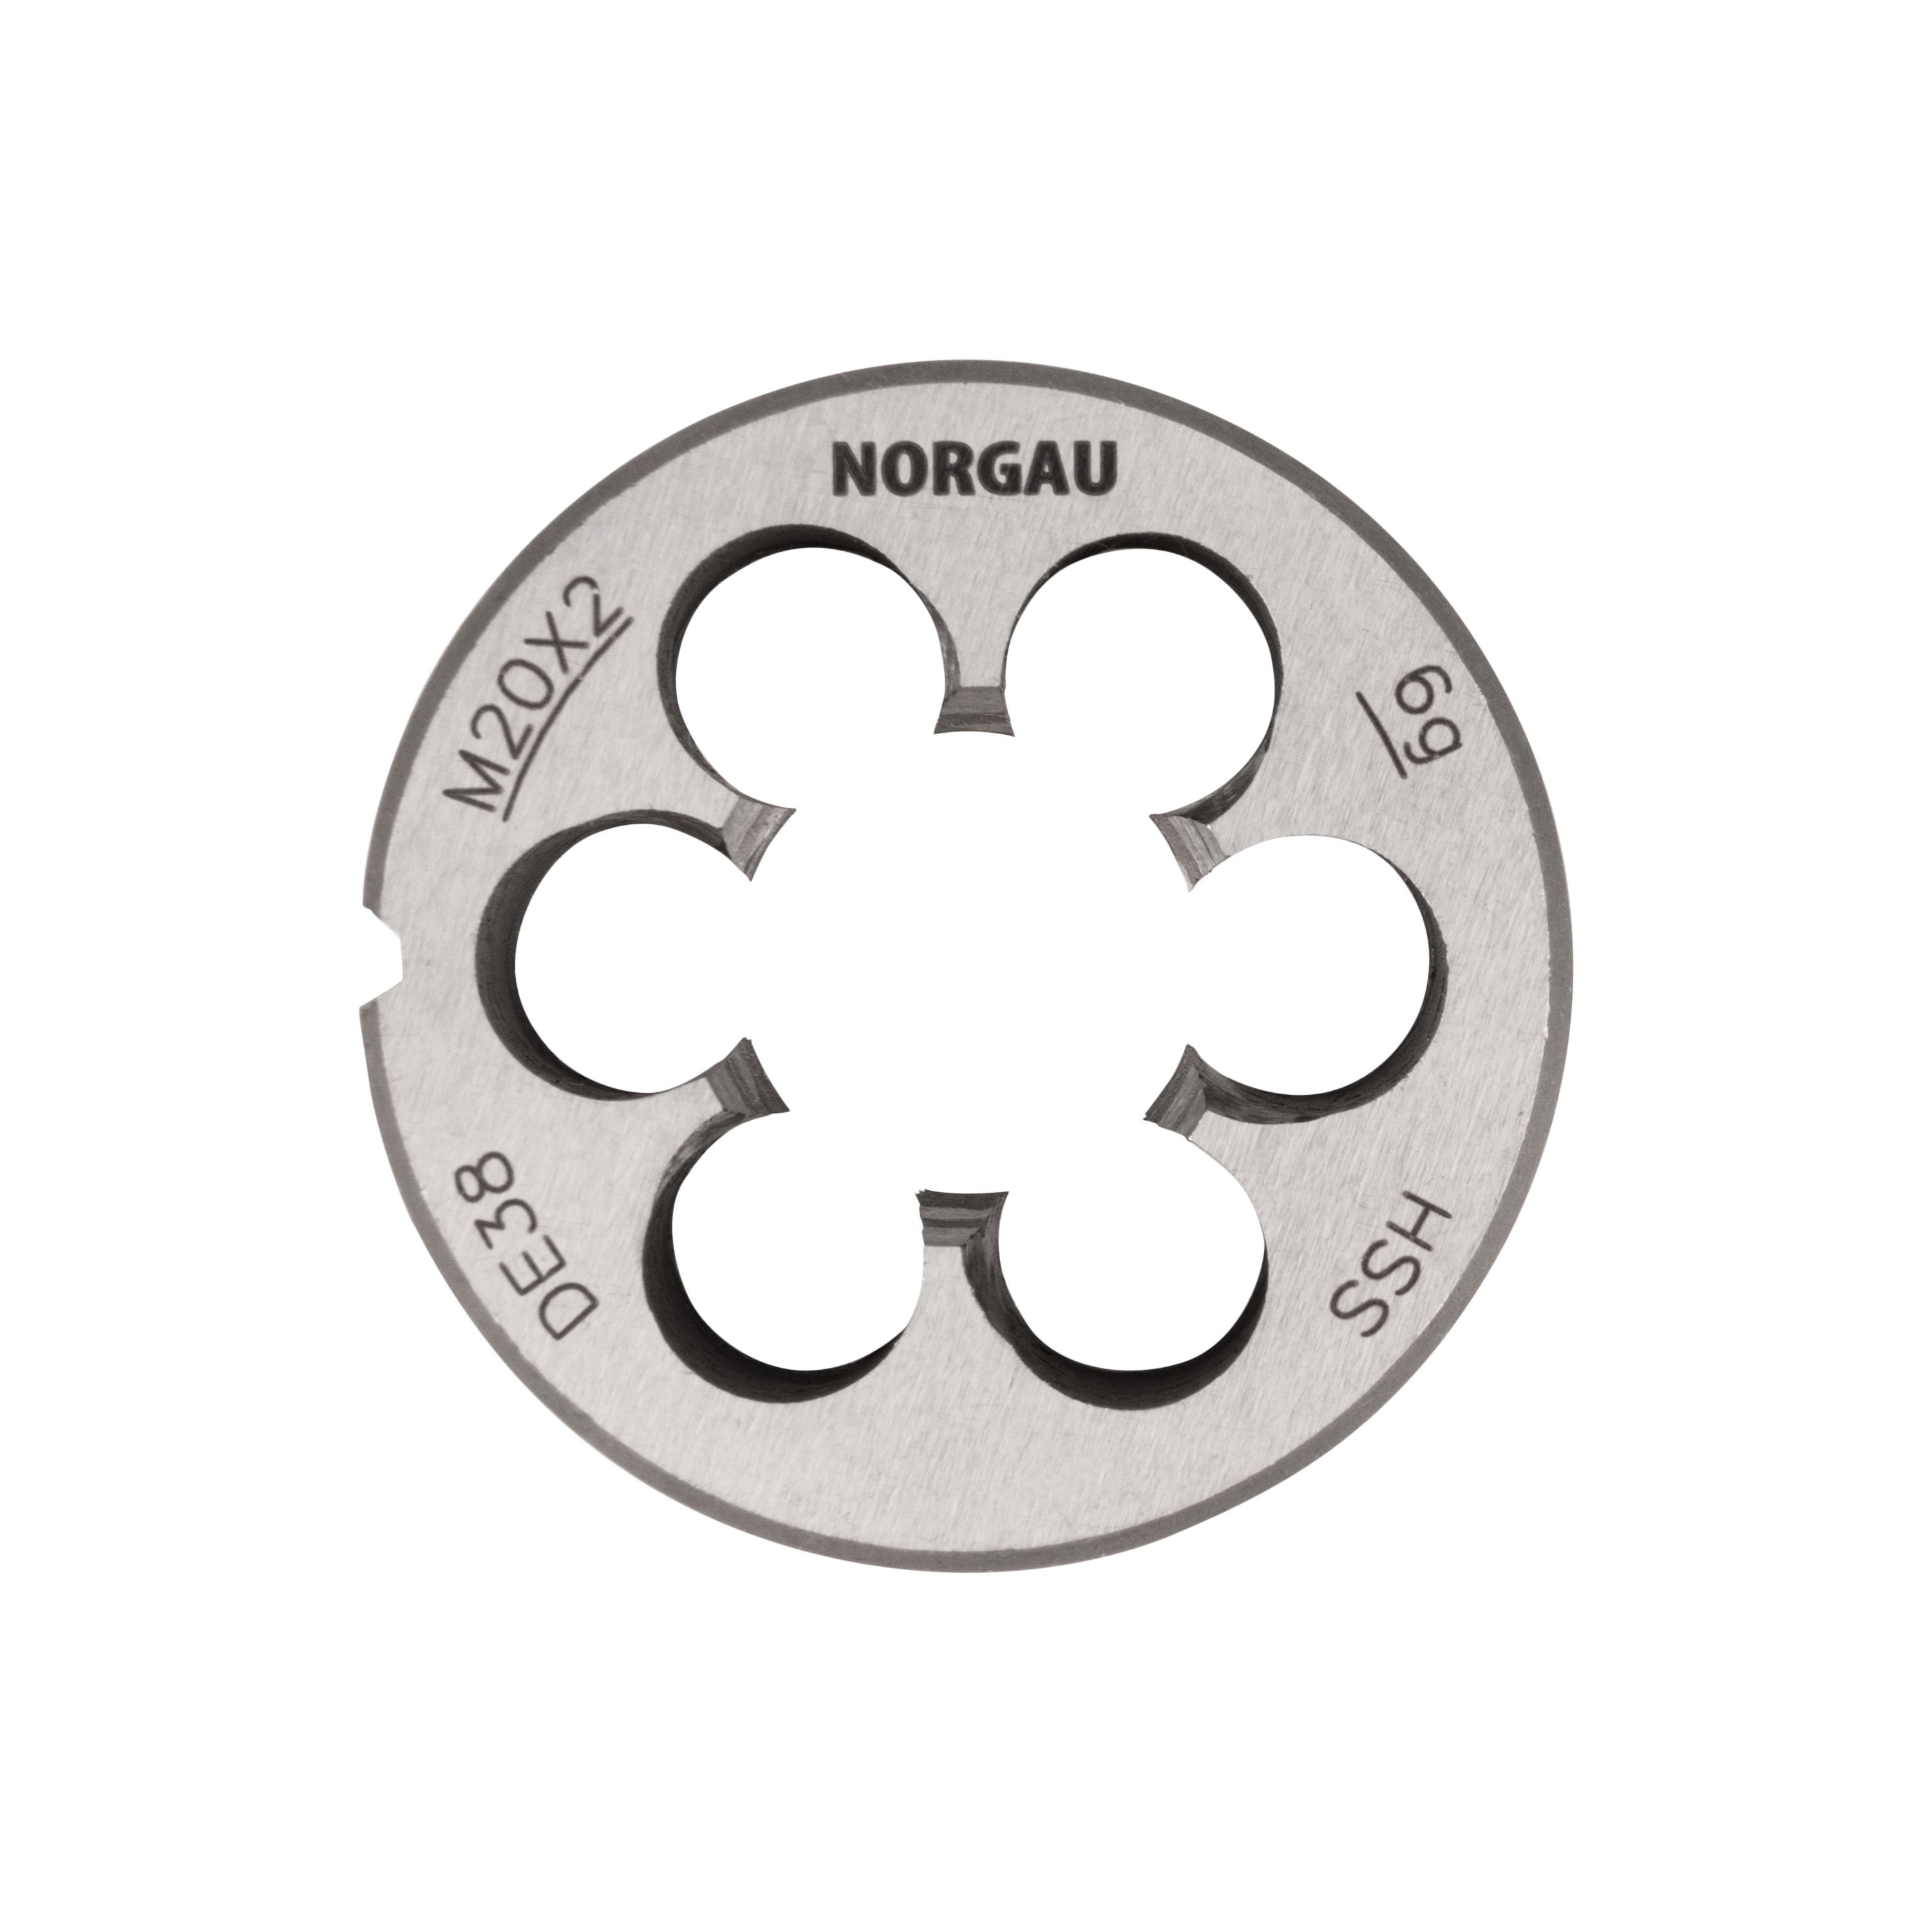 Плашка NORGAU Industrial М20х1.5х45 мм, метрическая, угол 60°, по DIN223, HSS плашка м8х1 25 мм norgau industrial метрическая угол 60° по din223 hss